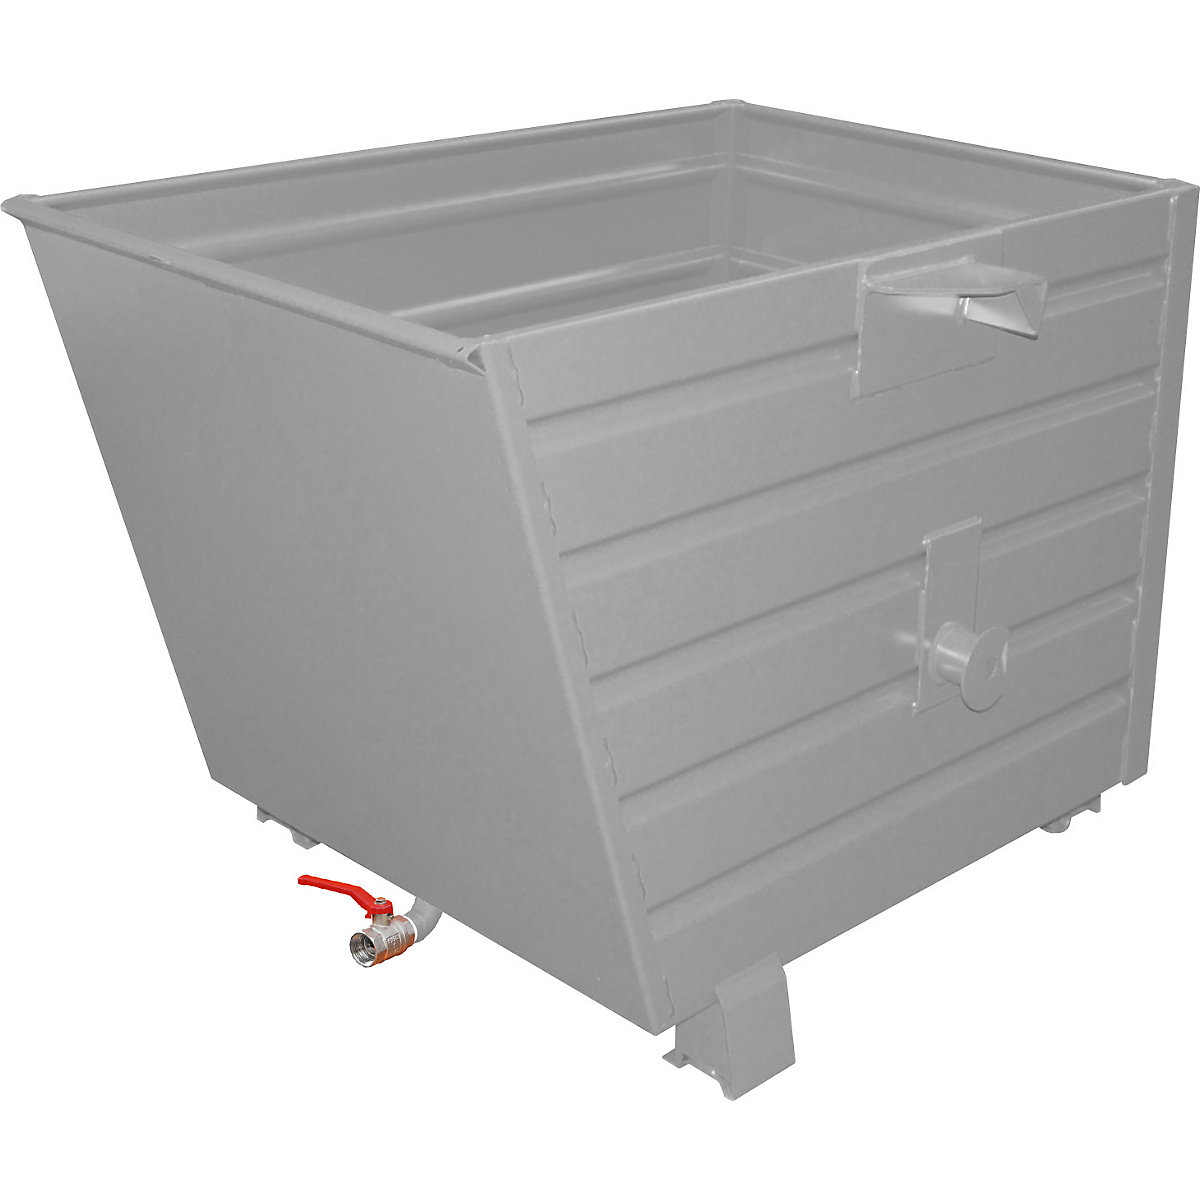 Container basculant și stivuibil pentru șpan BSL – eurokraft pro, volum 0,7 m³, gri șobolan-4